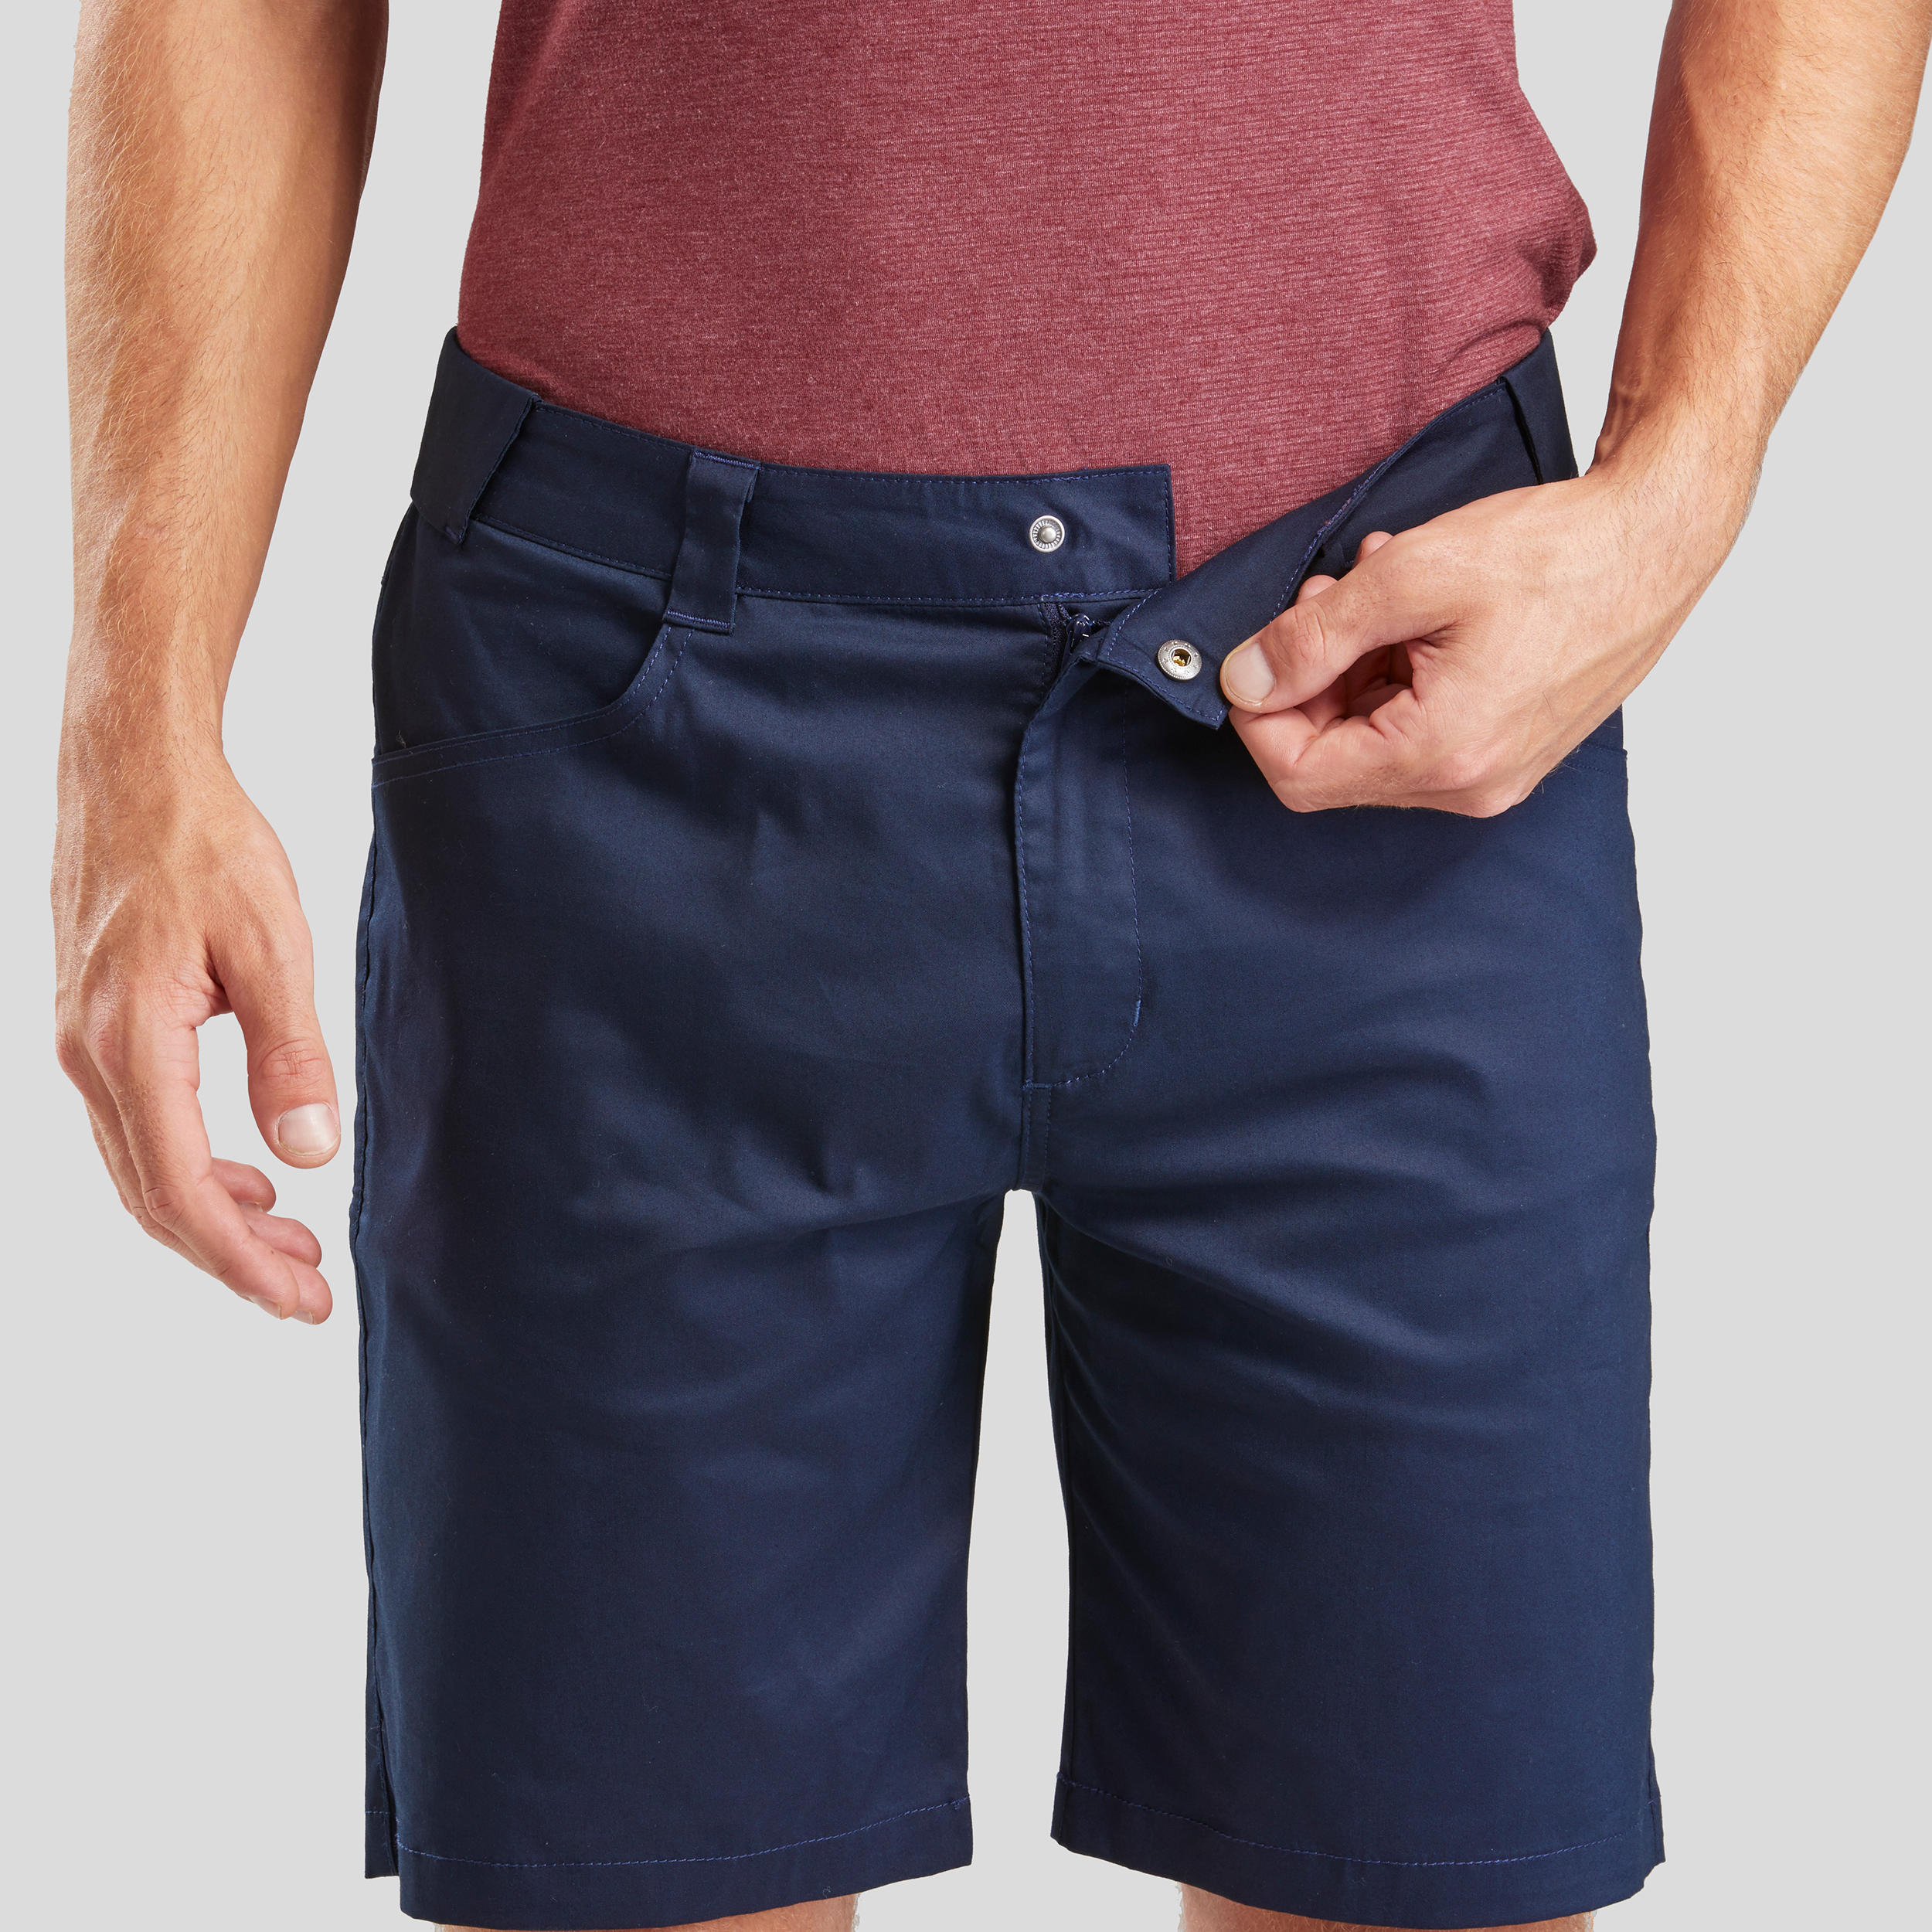 Men's Stretch Fabric Hiking Shorts – Guts Fishing Apparel